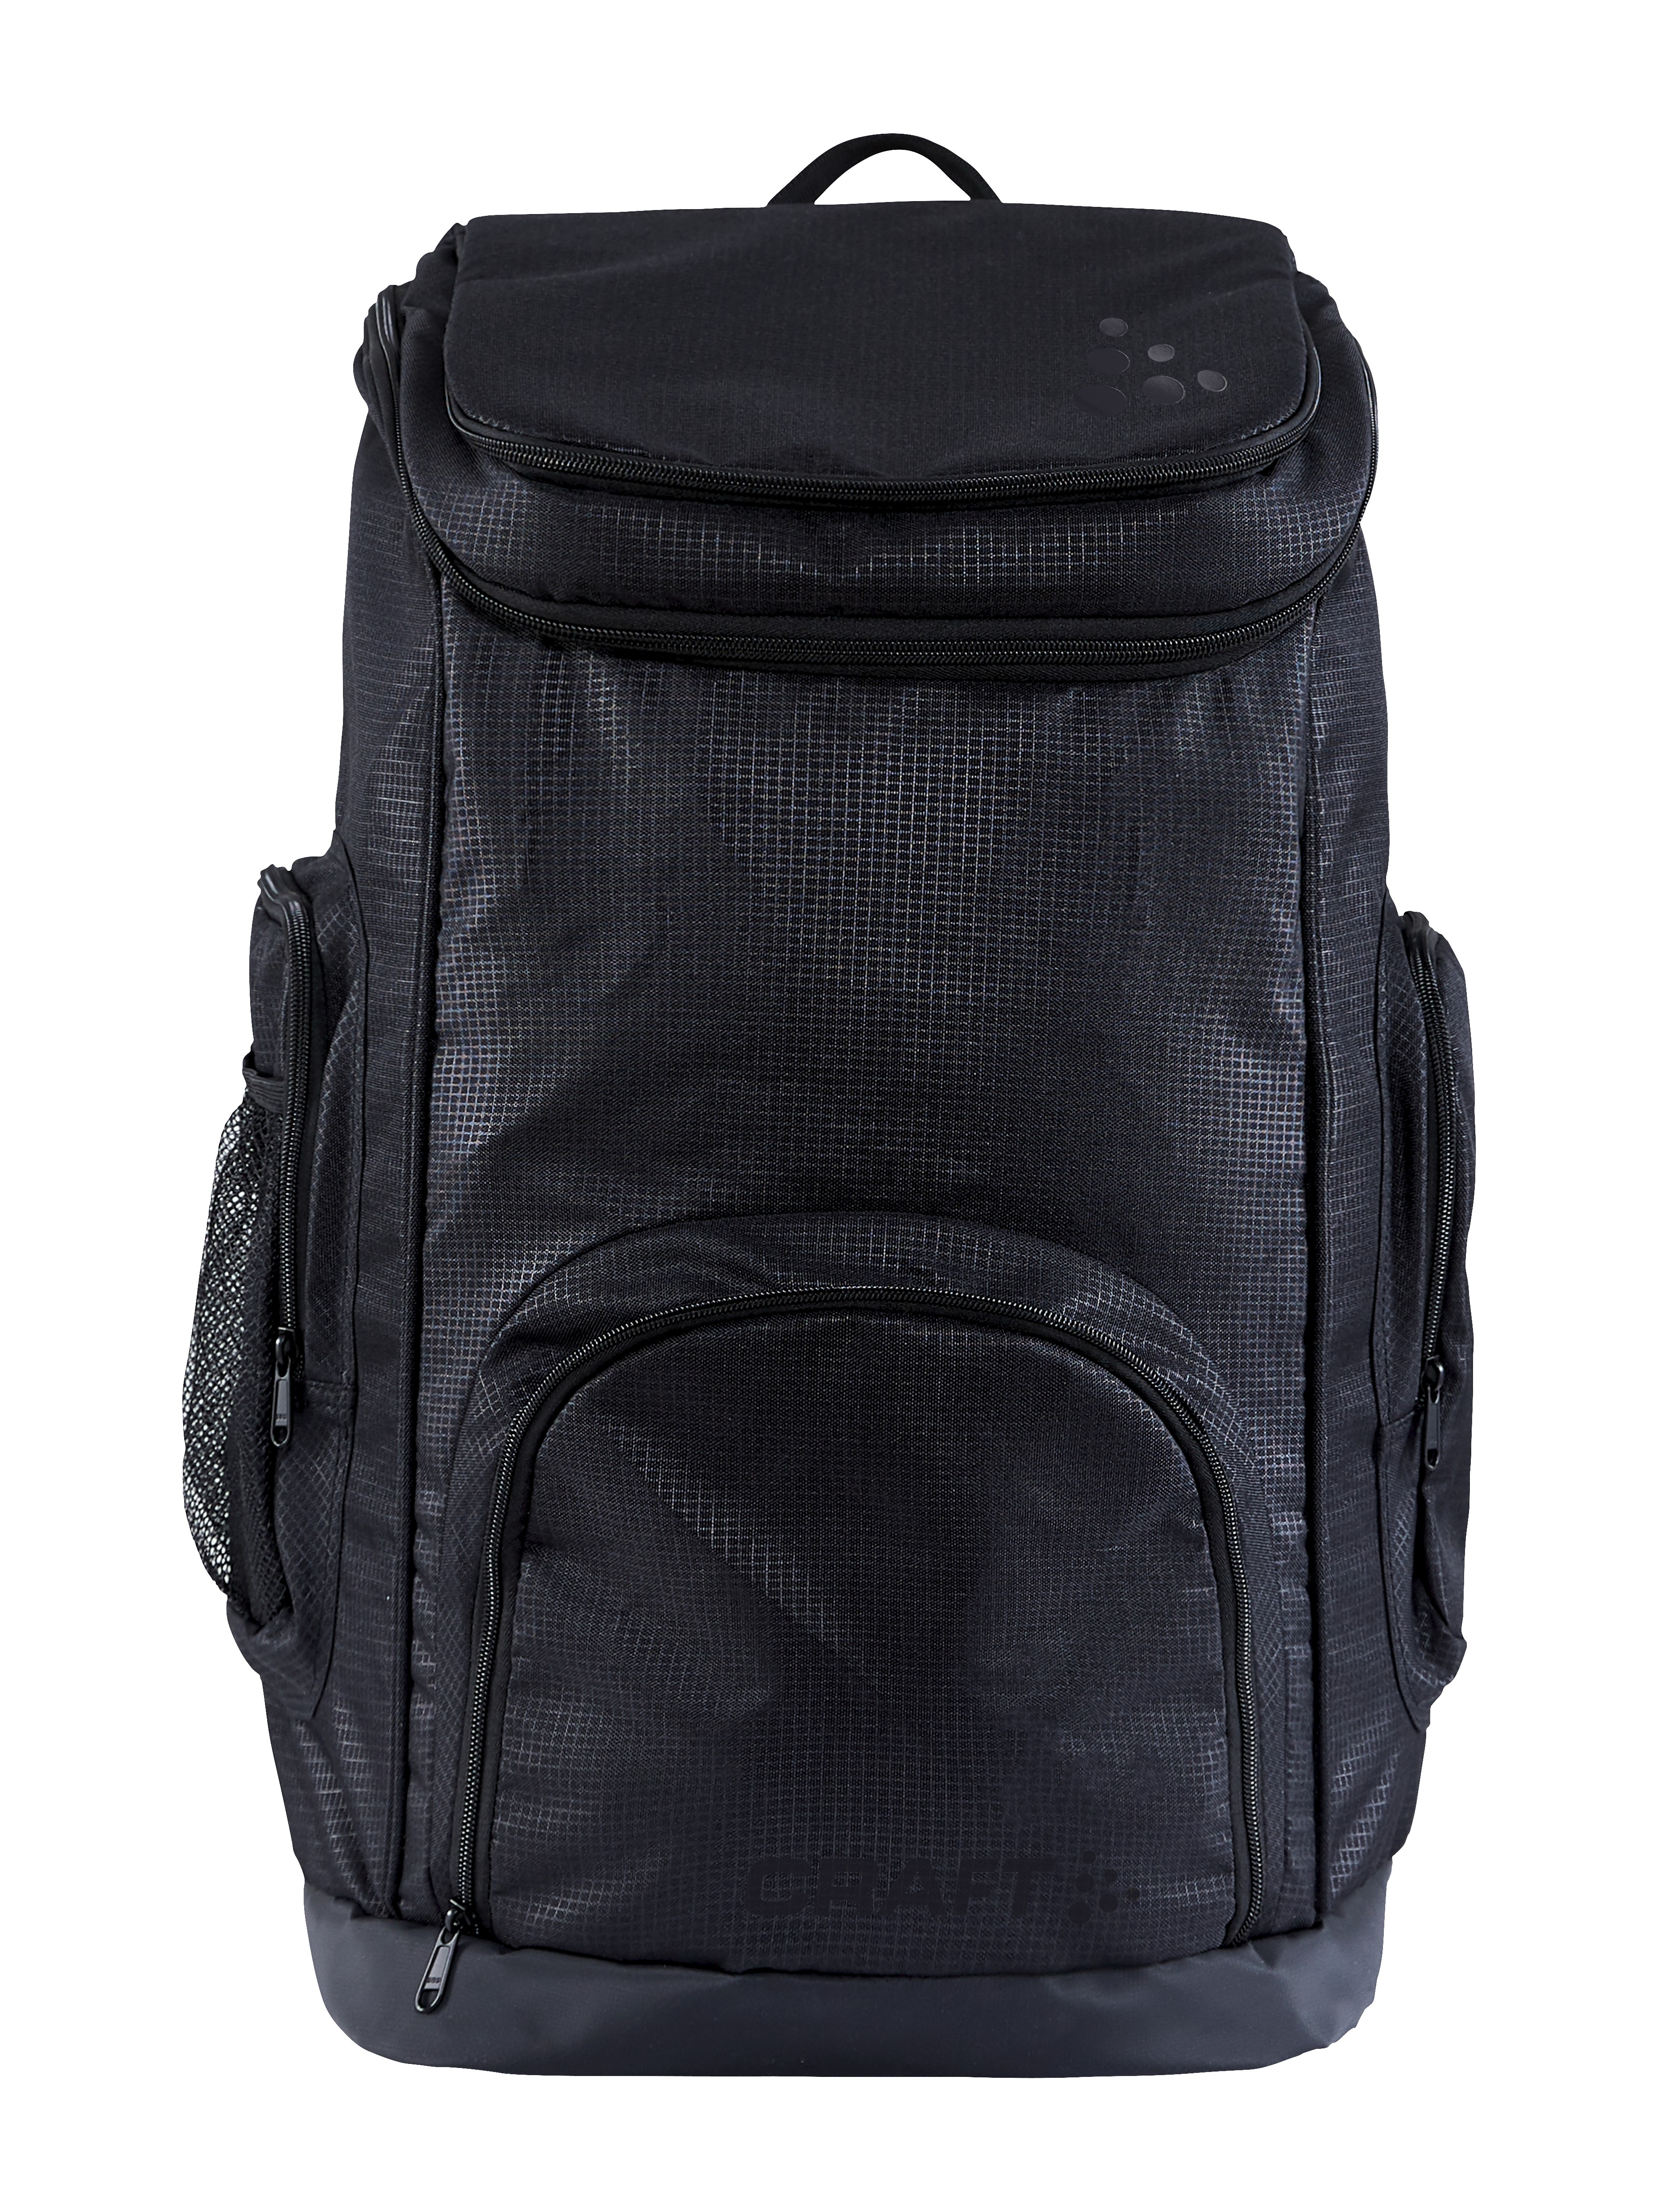 BAG EQUIPMENT TRANSIT | Sportswear Black 65 L - Craft